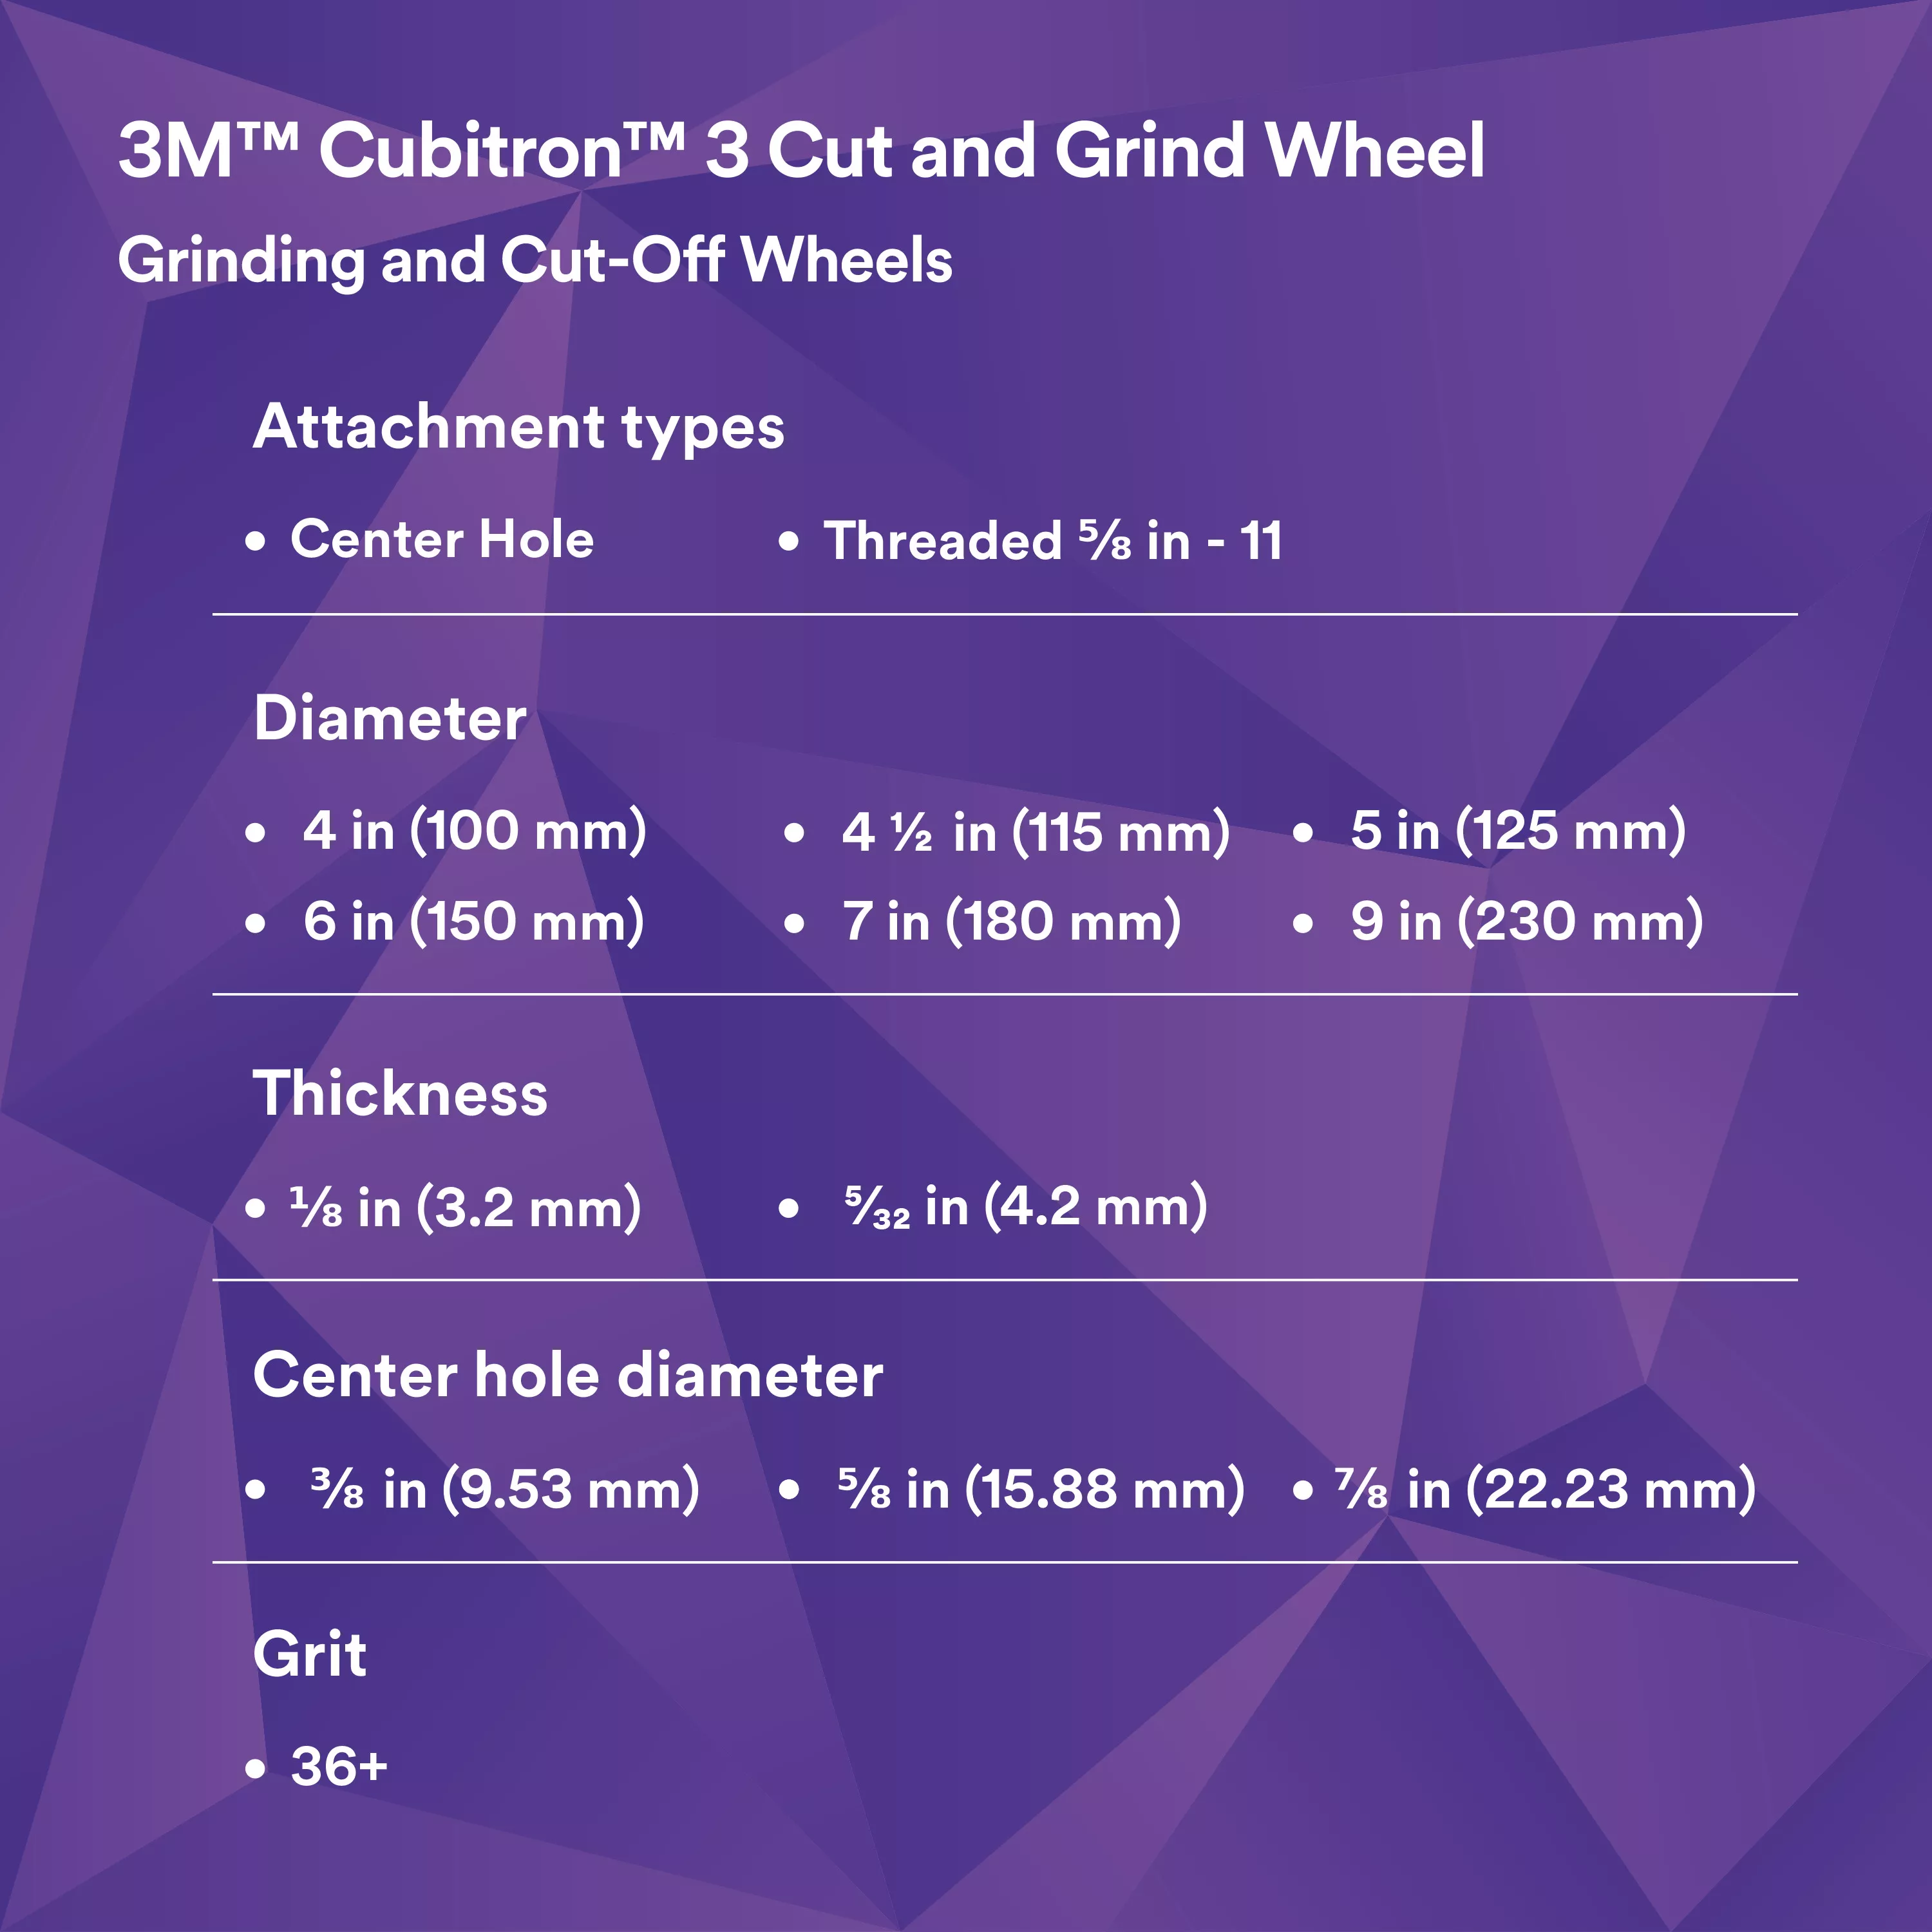 SKU 7100313197 | 3M™ Cubitron™ 3 Cut and Grind Wheel